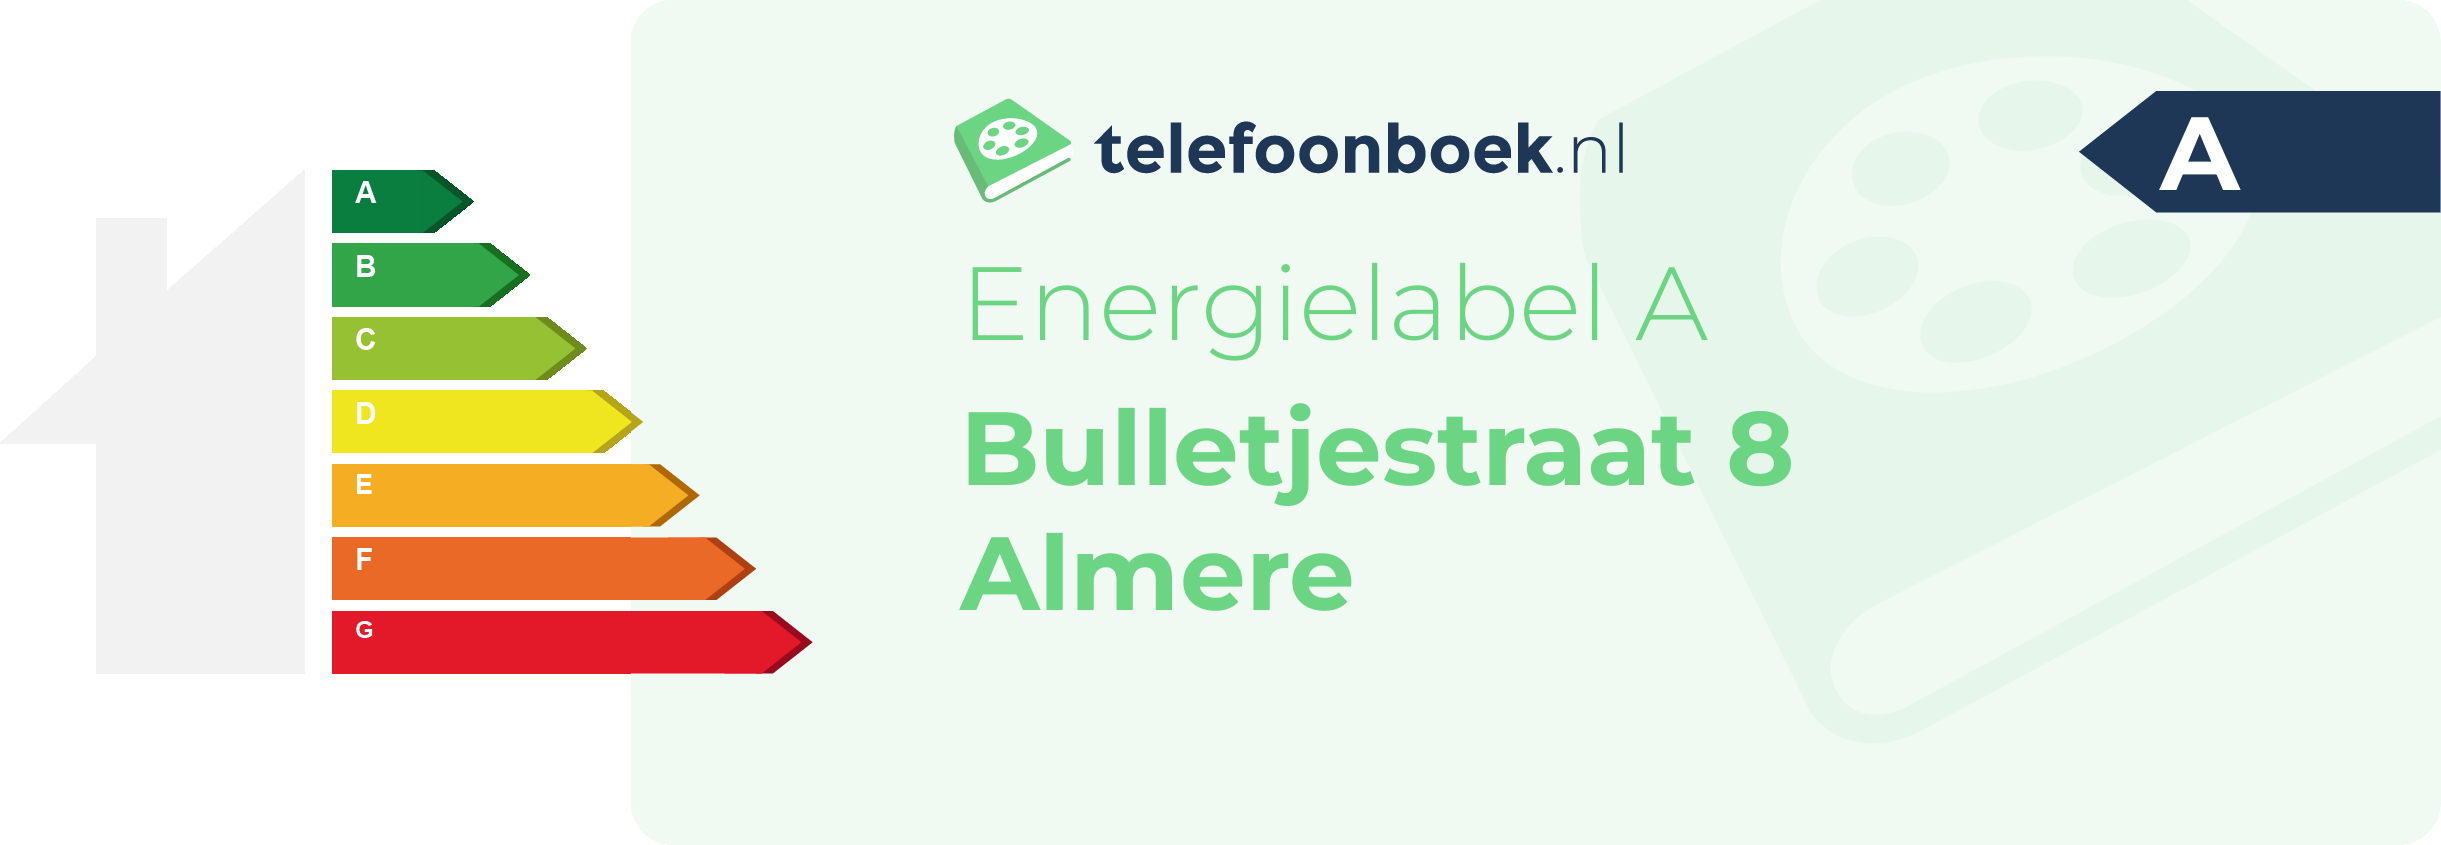 Energielabel Bulletjestraat 8 Almere